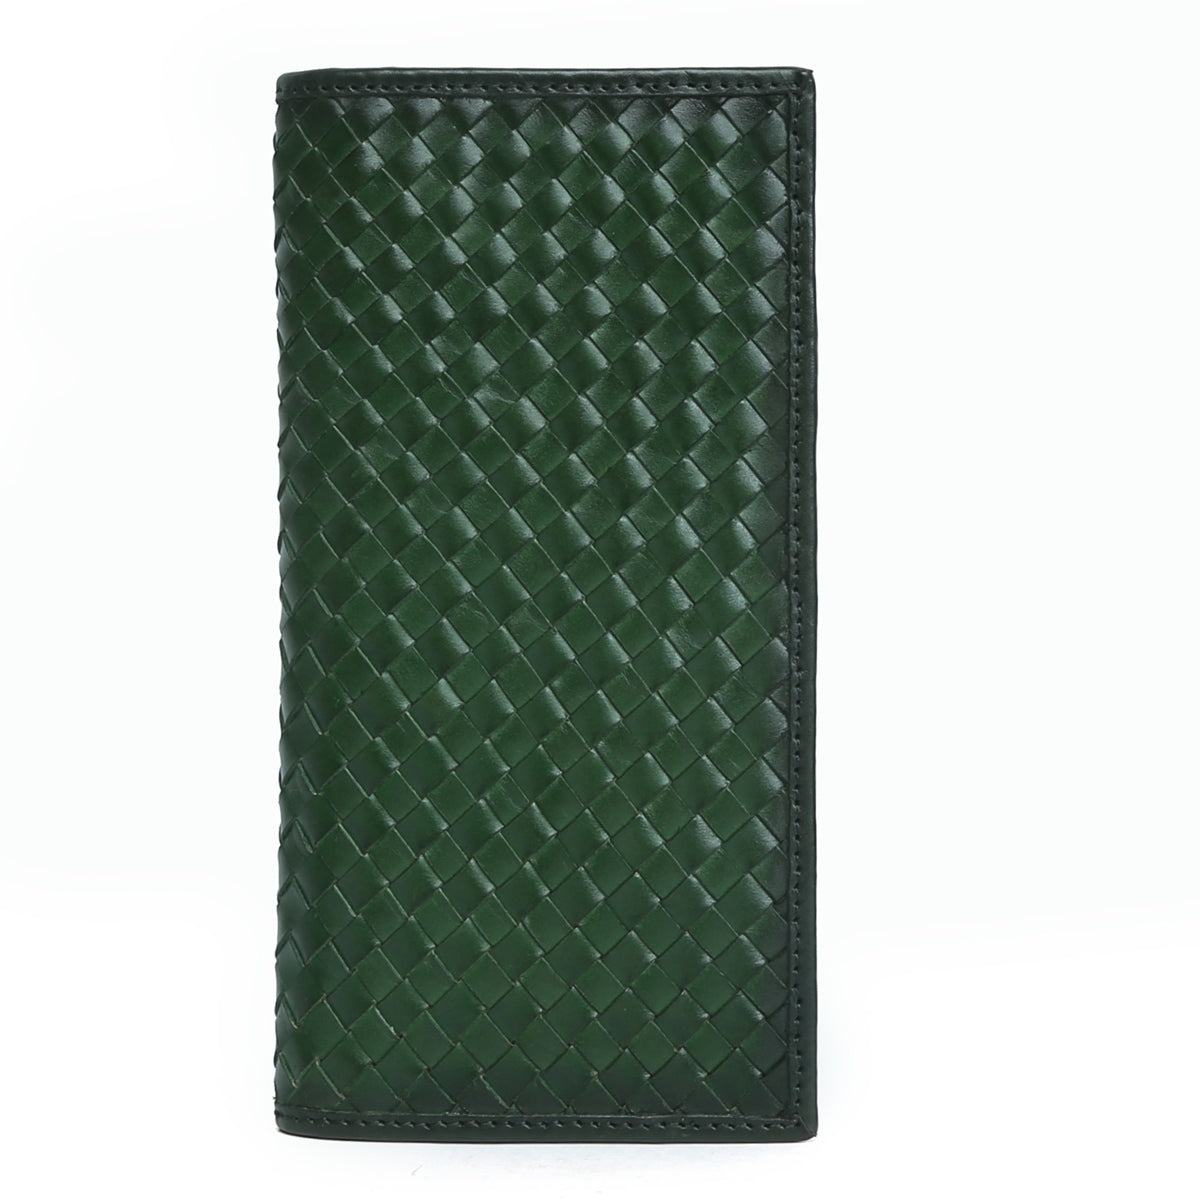 Green Hand Weave Leather Clutch/Wallet For Women By Brune & Bareskin